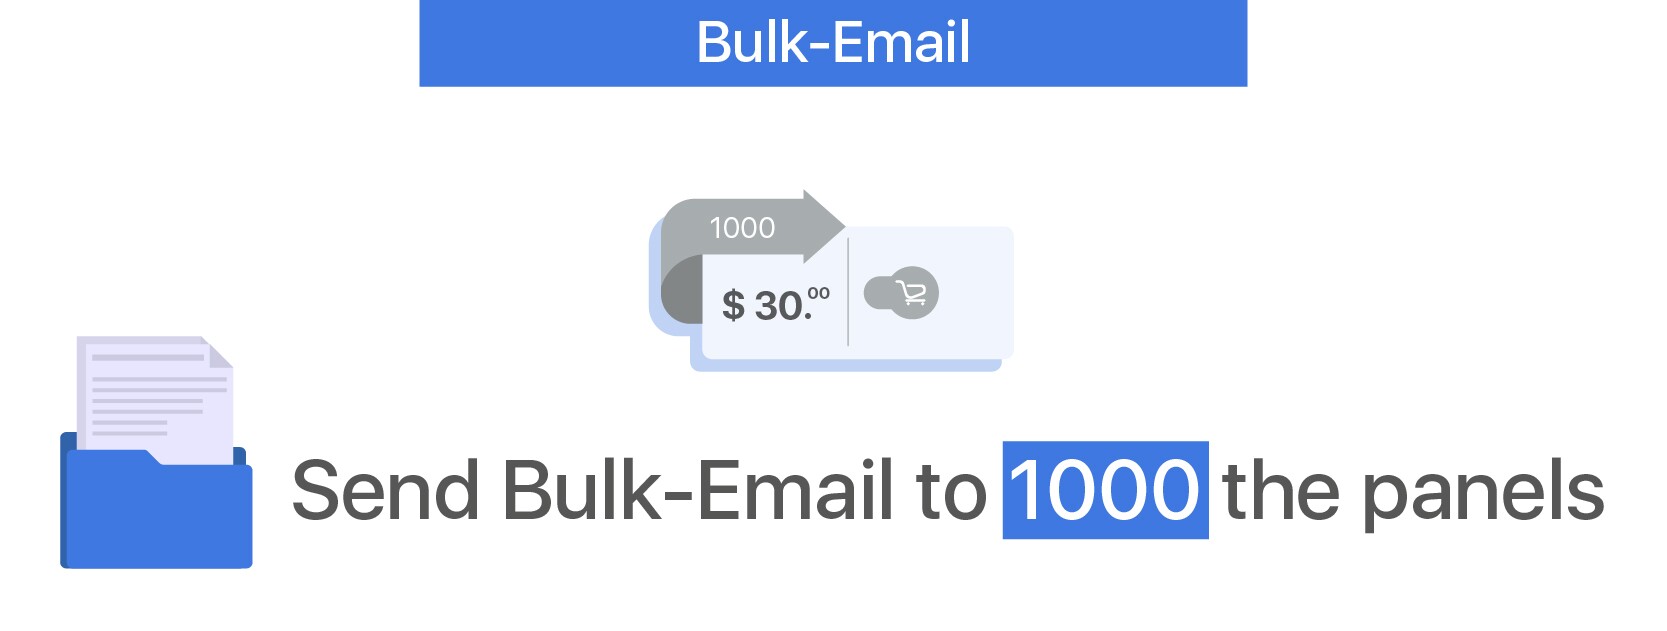 Bulk-Email - 1000 Panels